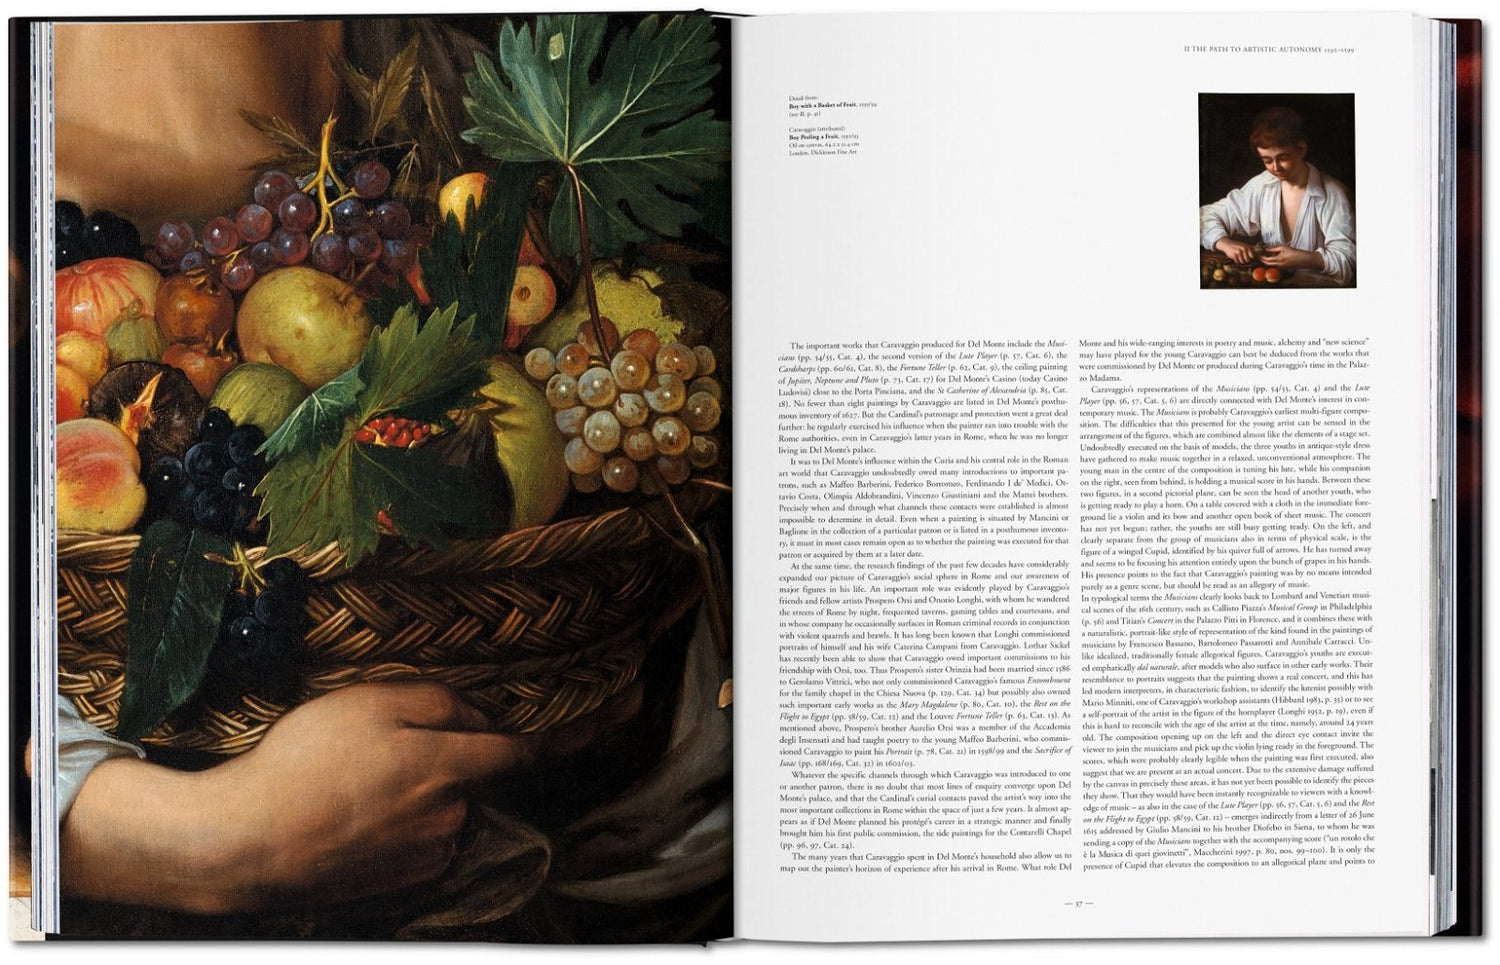 Caravaggio, The Complete Works (3)